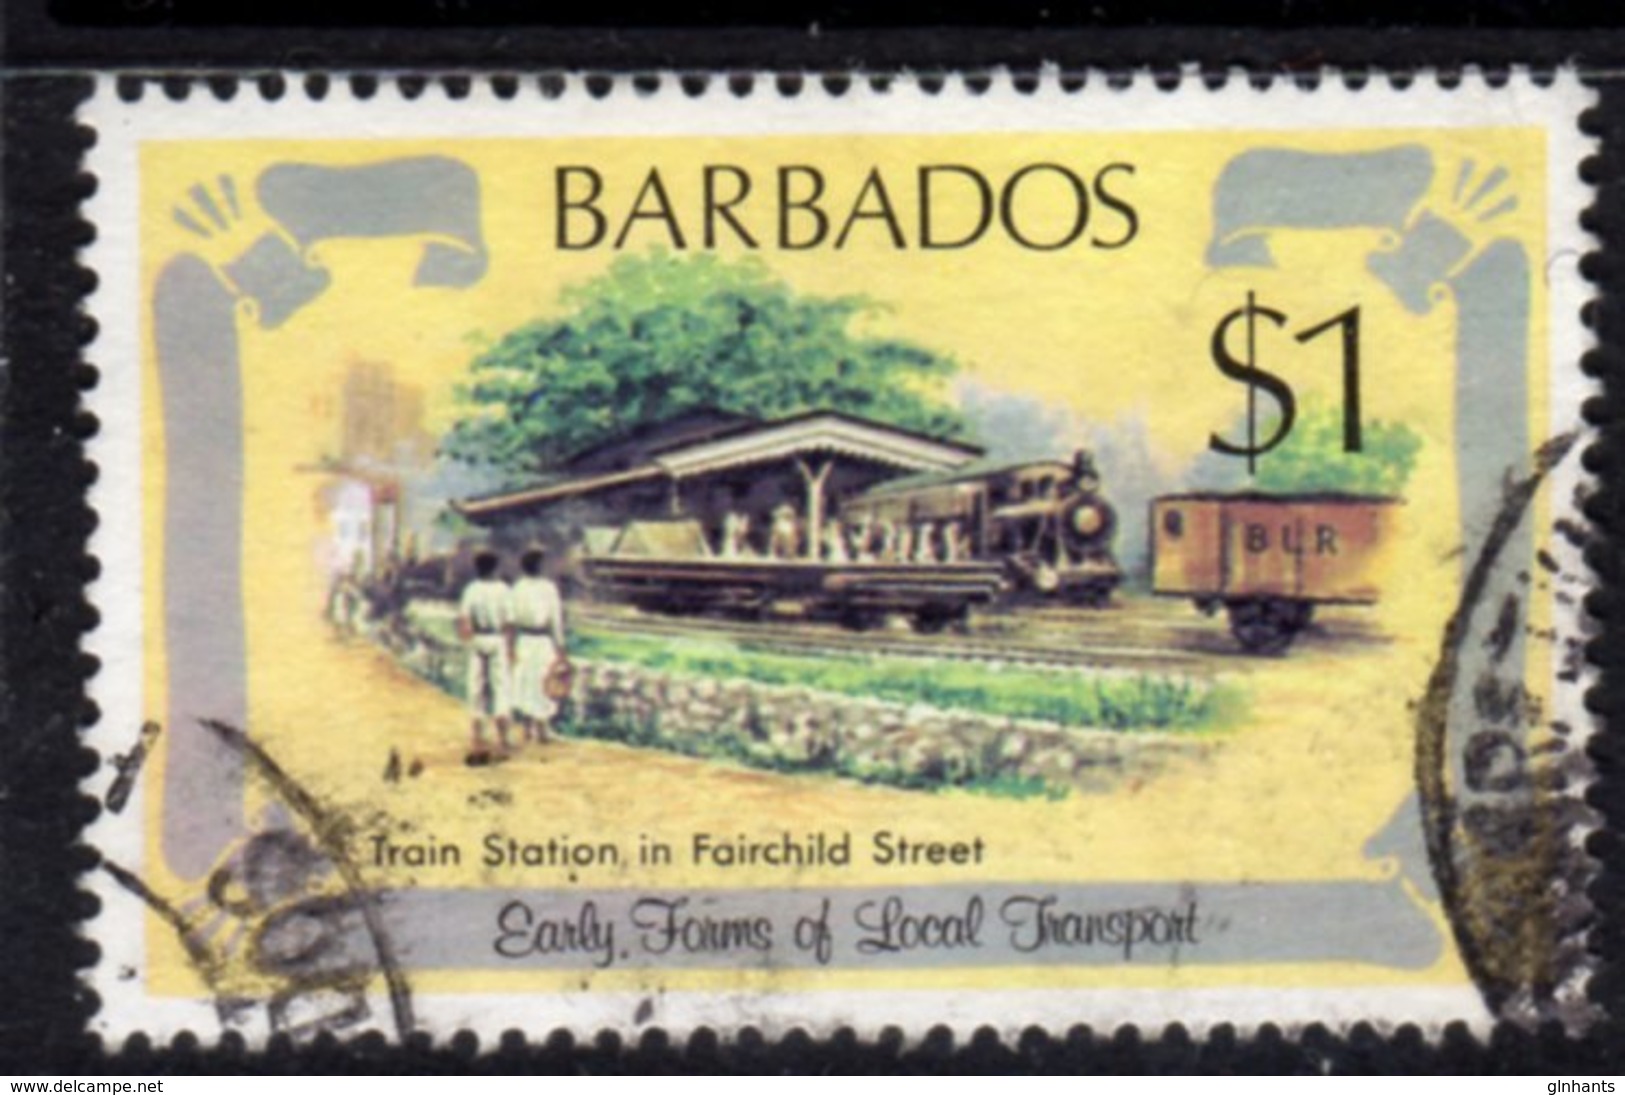 BARBADOS - 1981 $1 TRANSPORT RAILWAY STATION FINE USED REF E SG 669 - Barbados (1966-...)